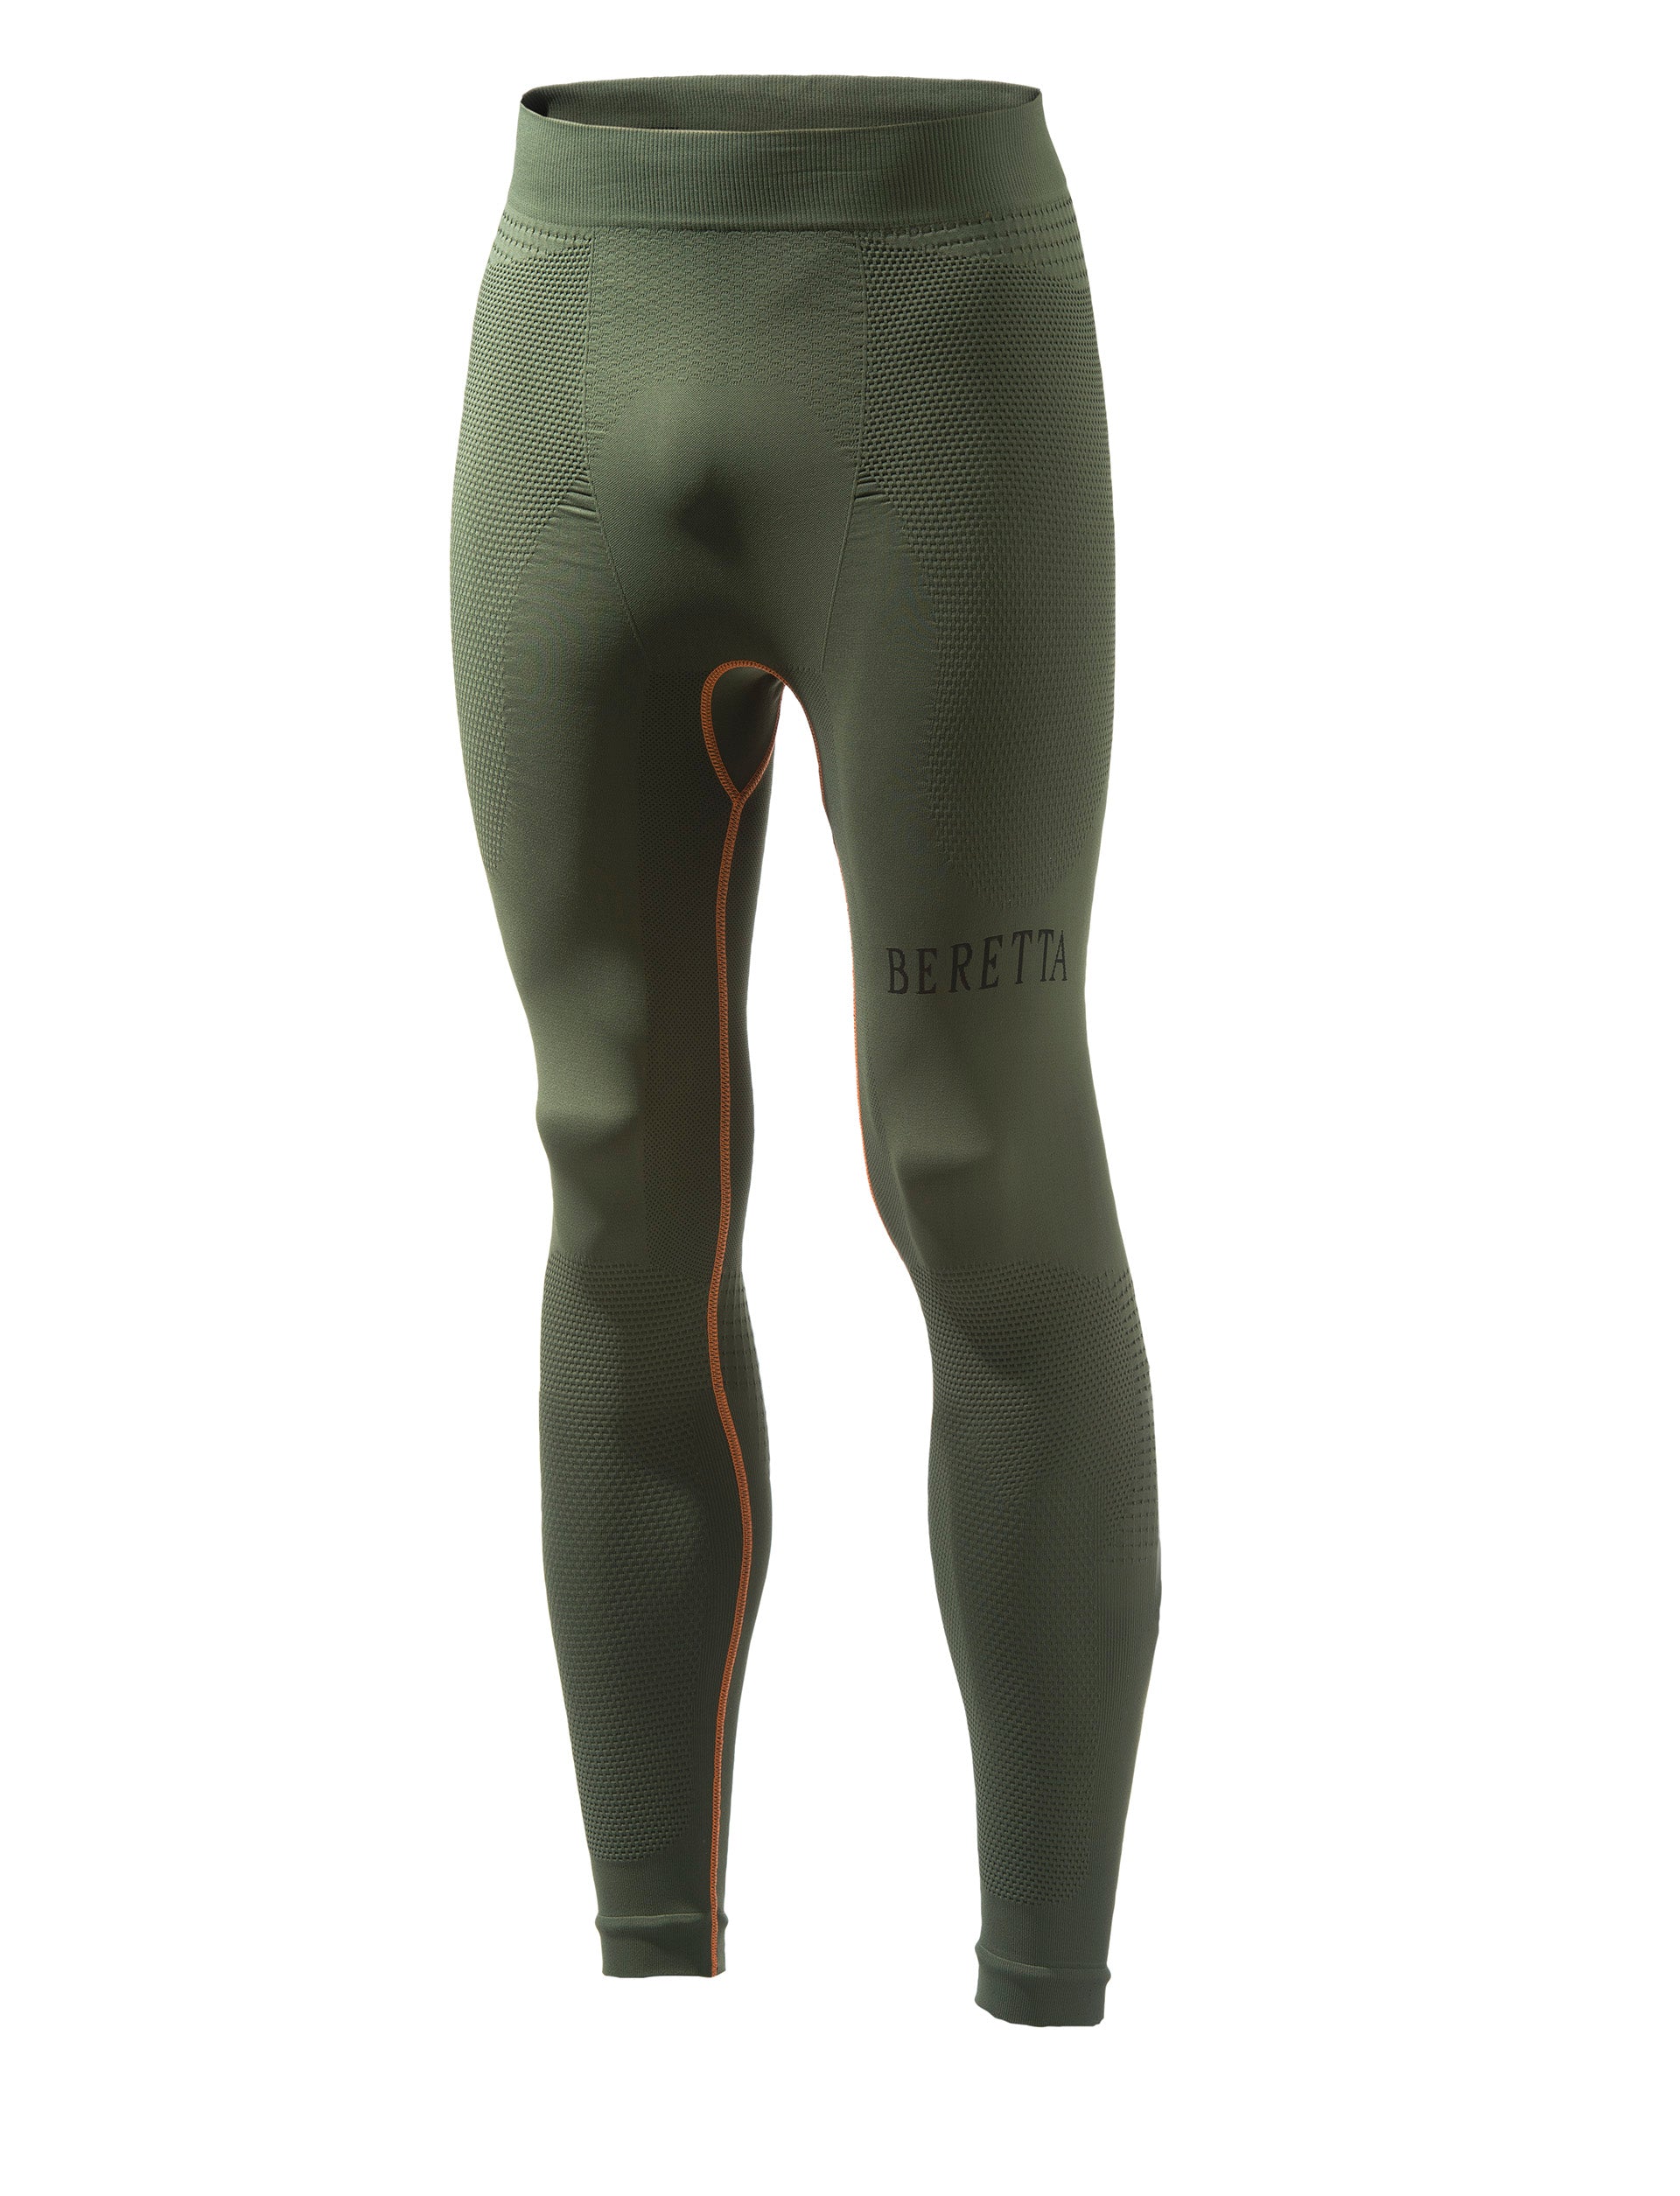 Pantalones Body Mapping 3D